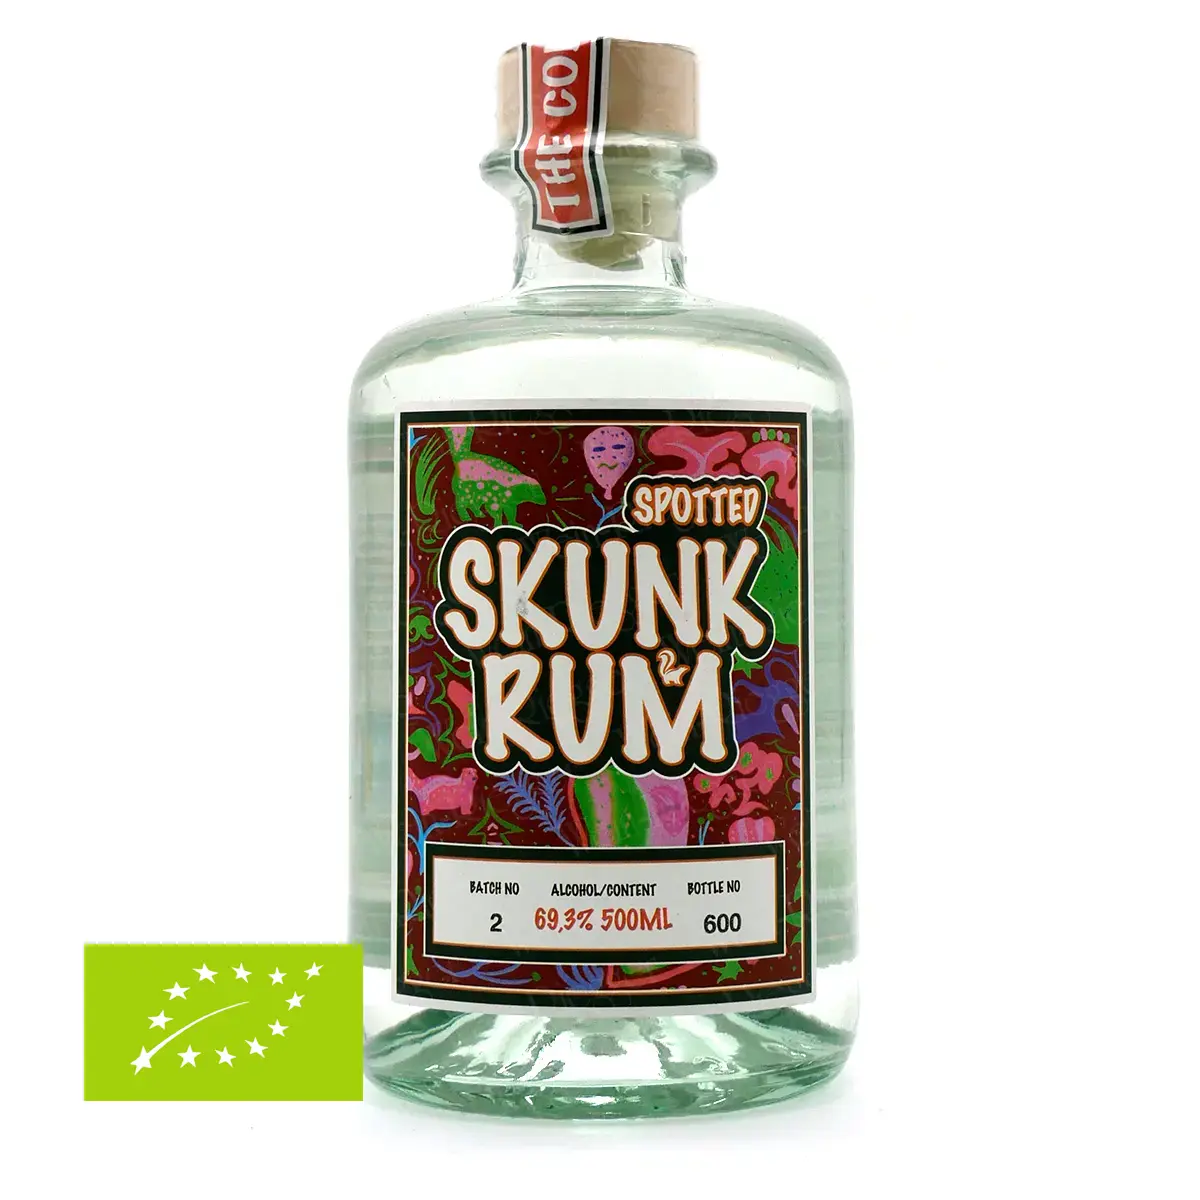 Skunk Rum | SPOTTED Batch No 2